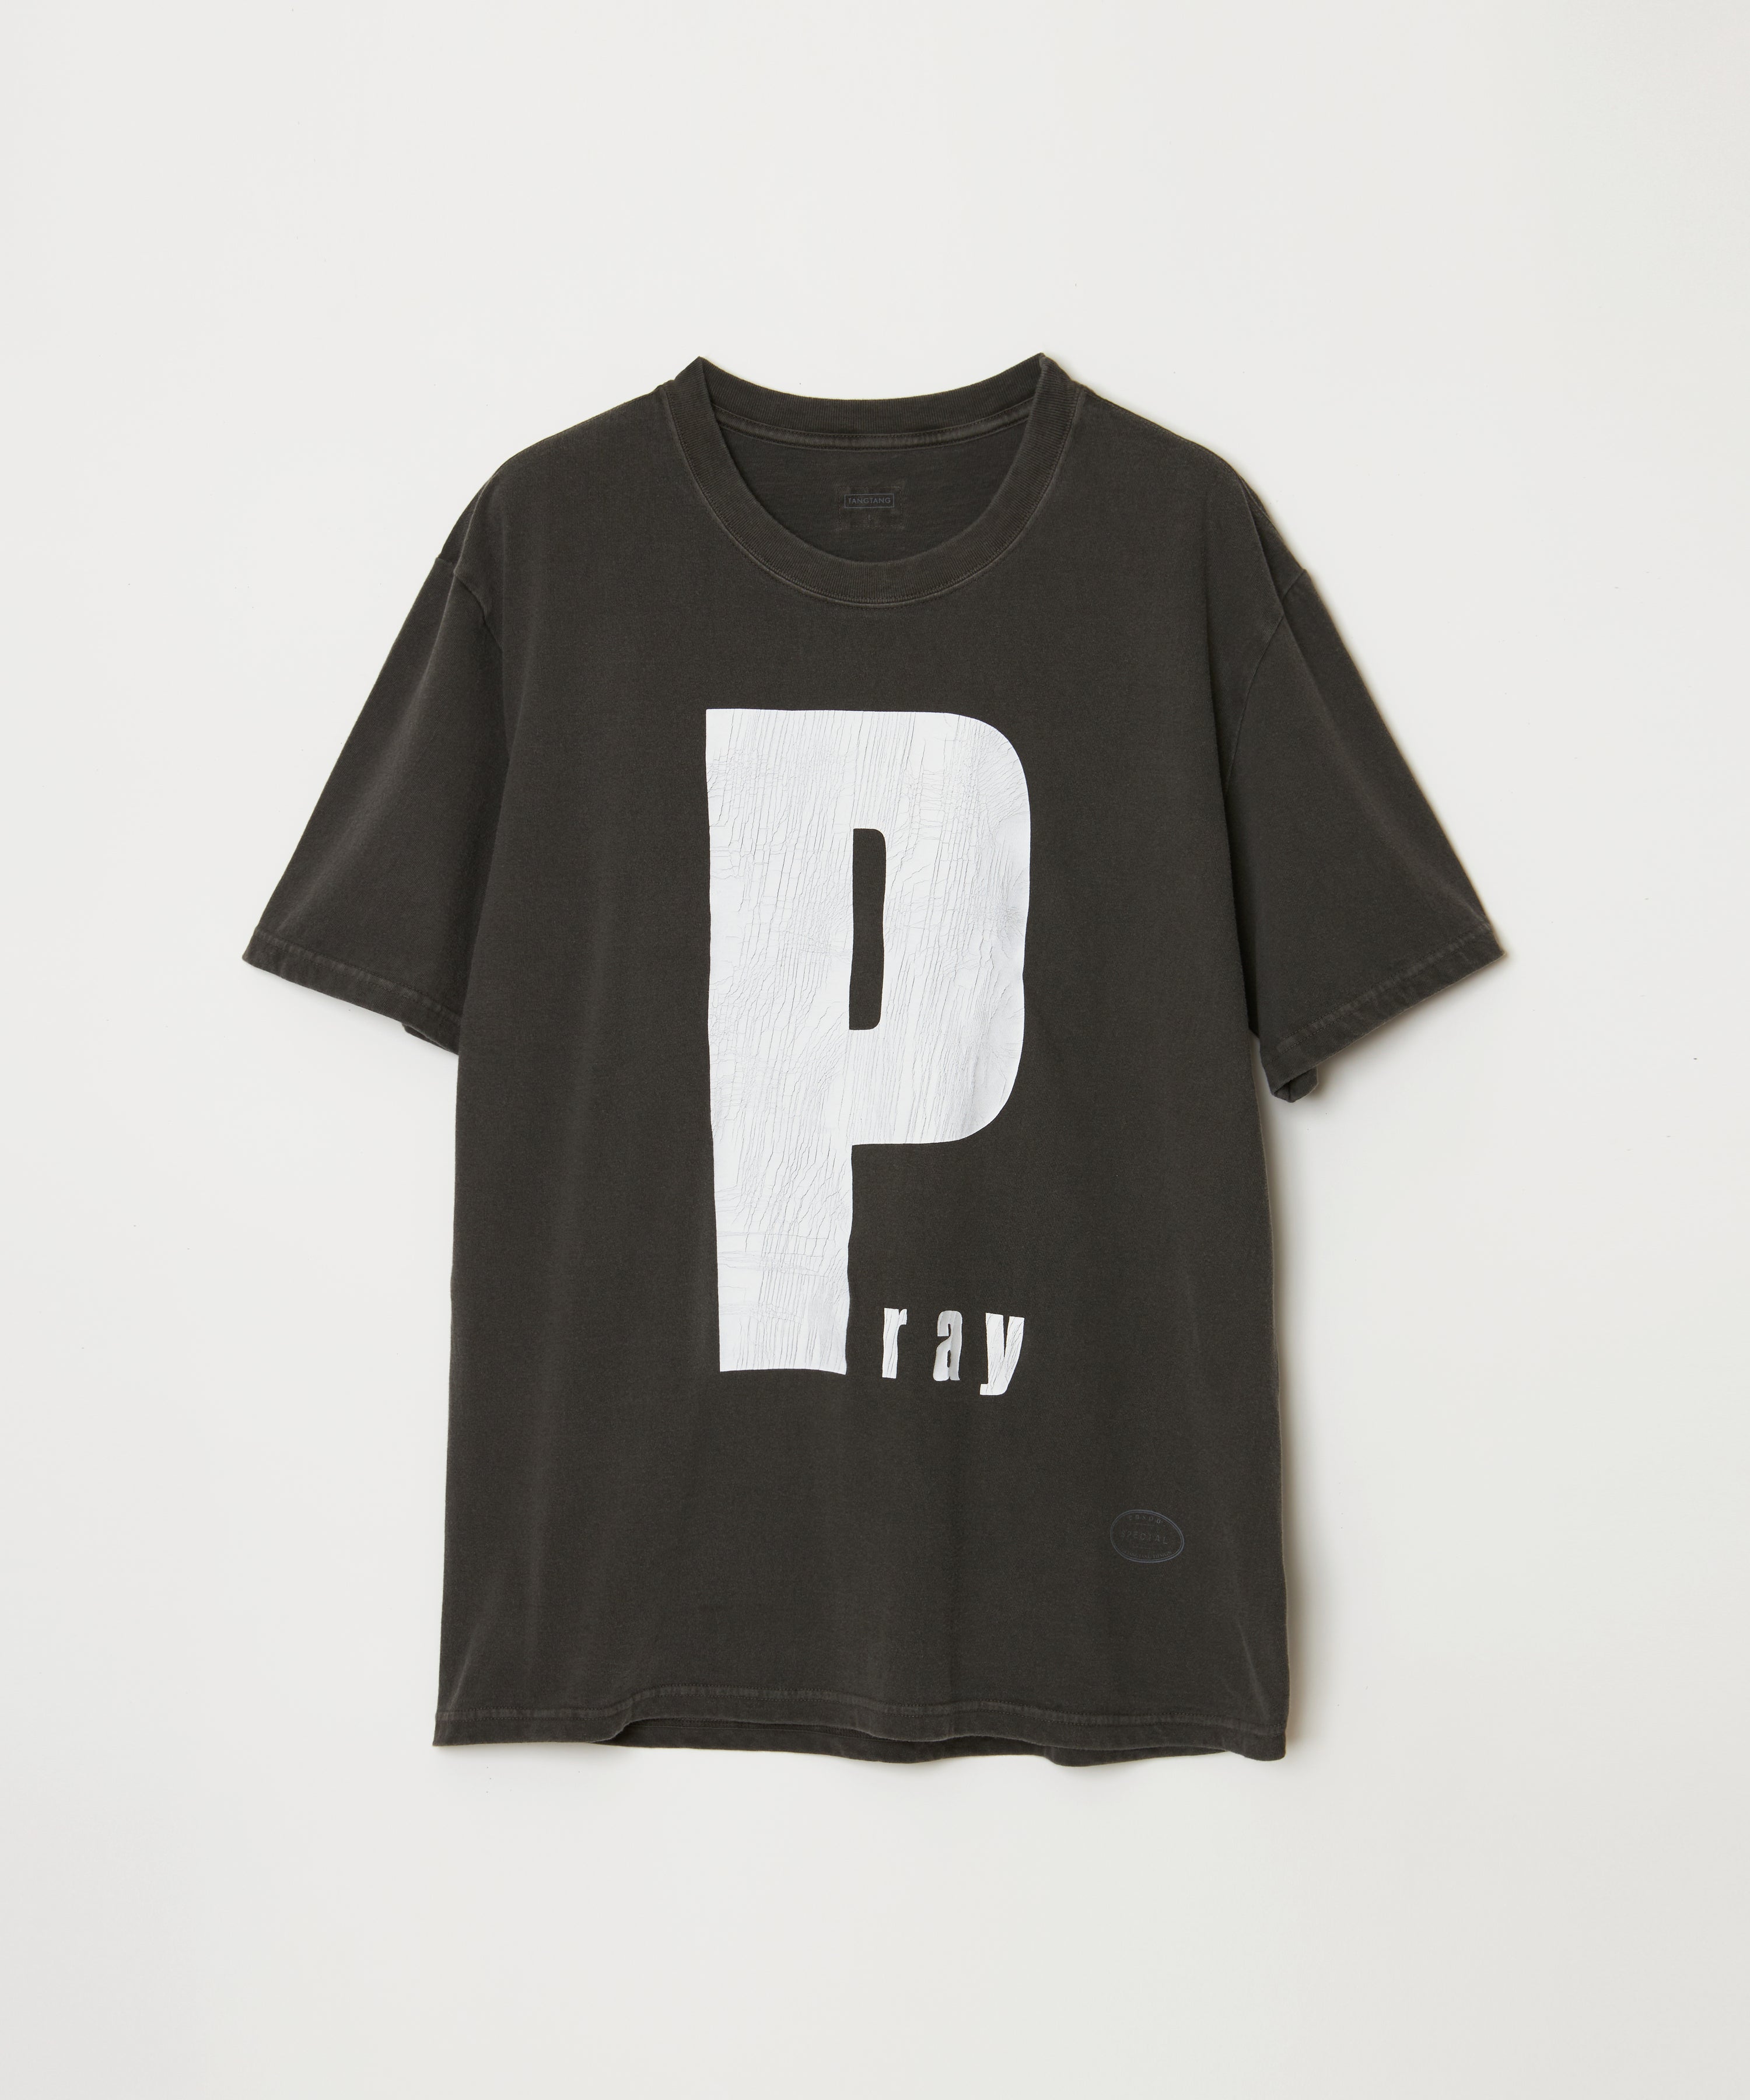 Cracked PRAY T-shirt 02 (Charcoal)